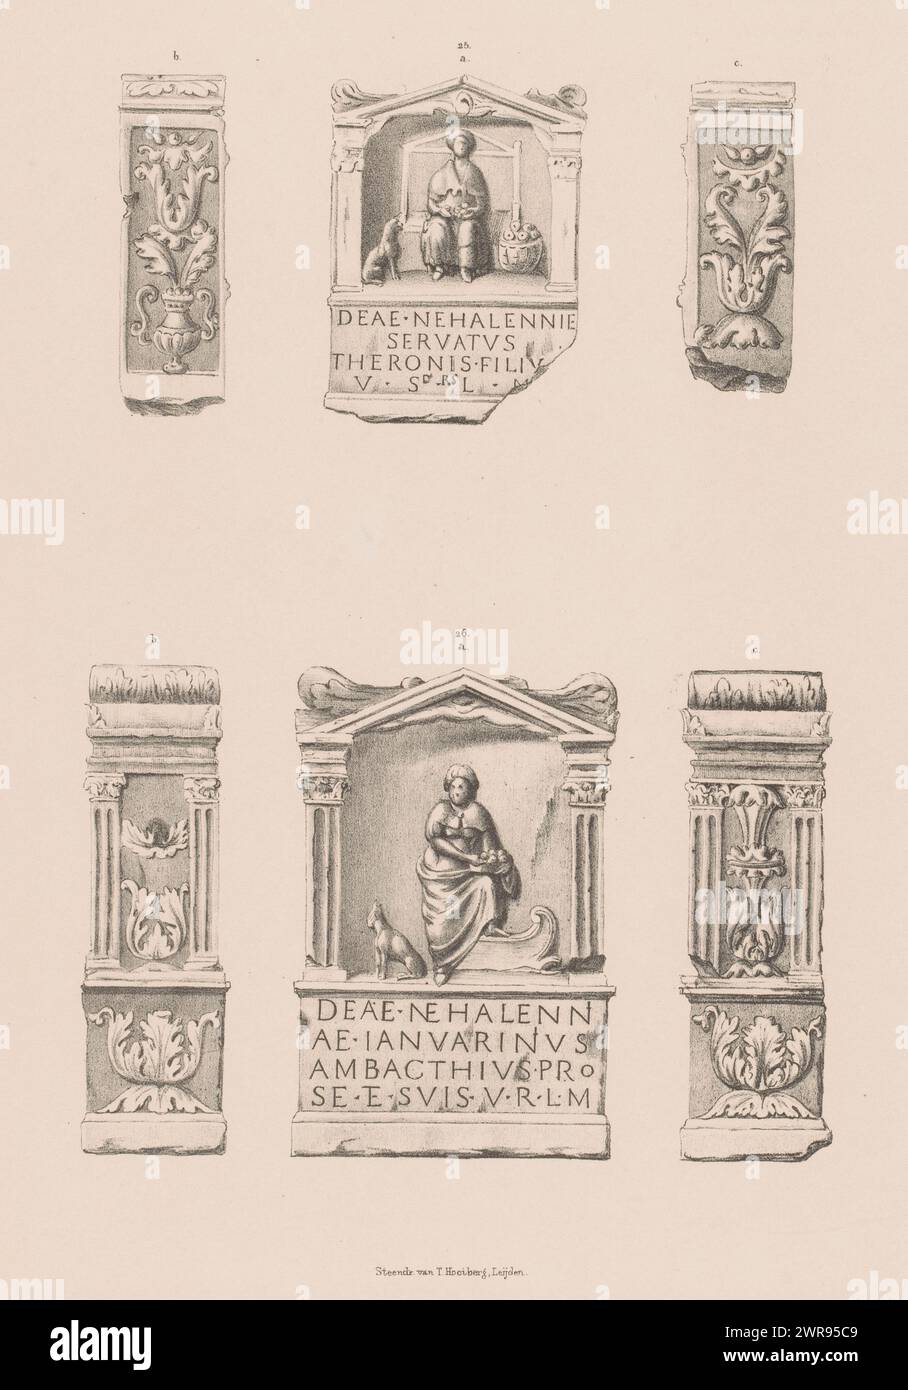 Two Nehalennia altars, pl. XIV, Roman statues and building fragments from Zeeland (series title), Two altars of the Roman goddess Nehalennia., printer: Tiemen Hooiberg, Leiden, 1843 - 1845, paper, height 360 mm × width 270 mm, print Stock Photo